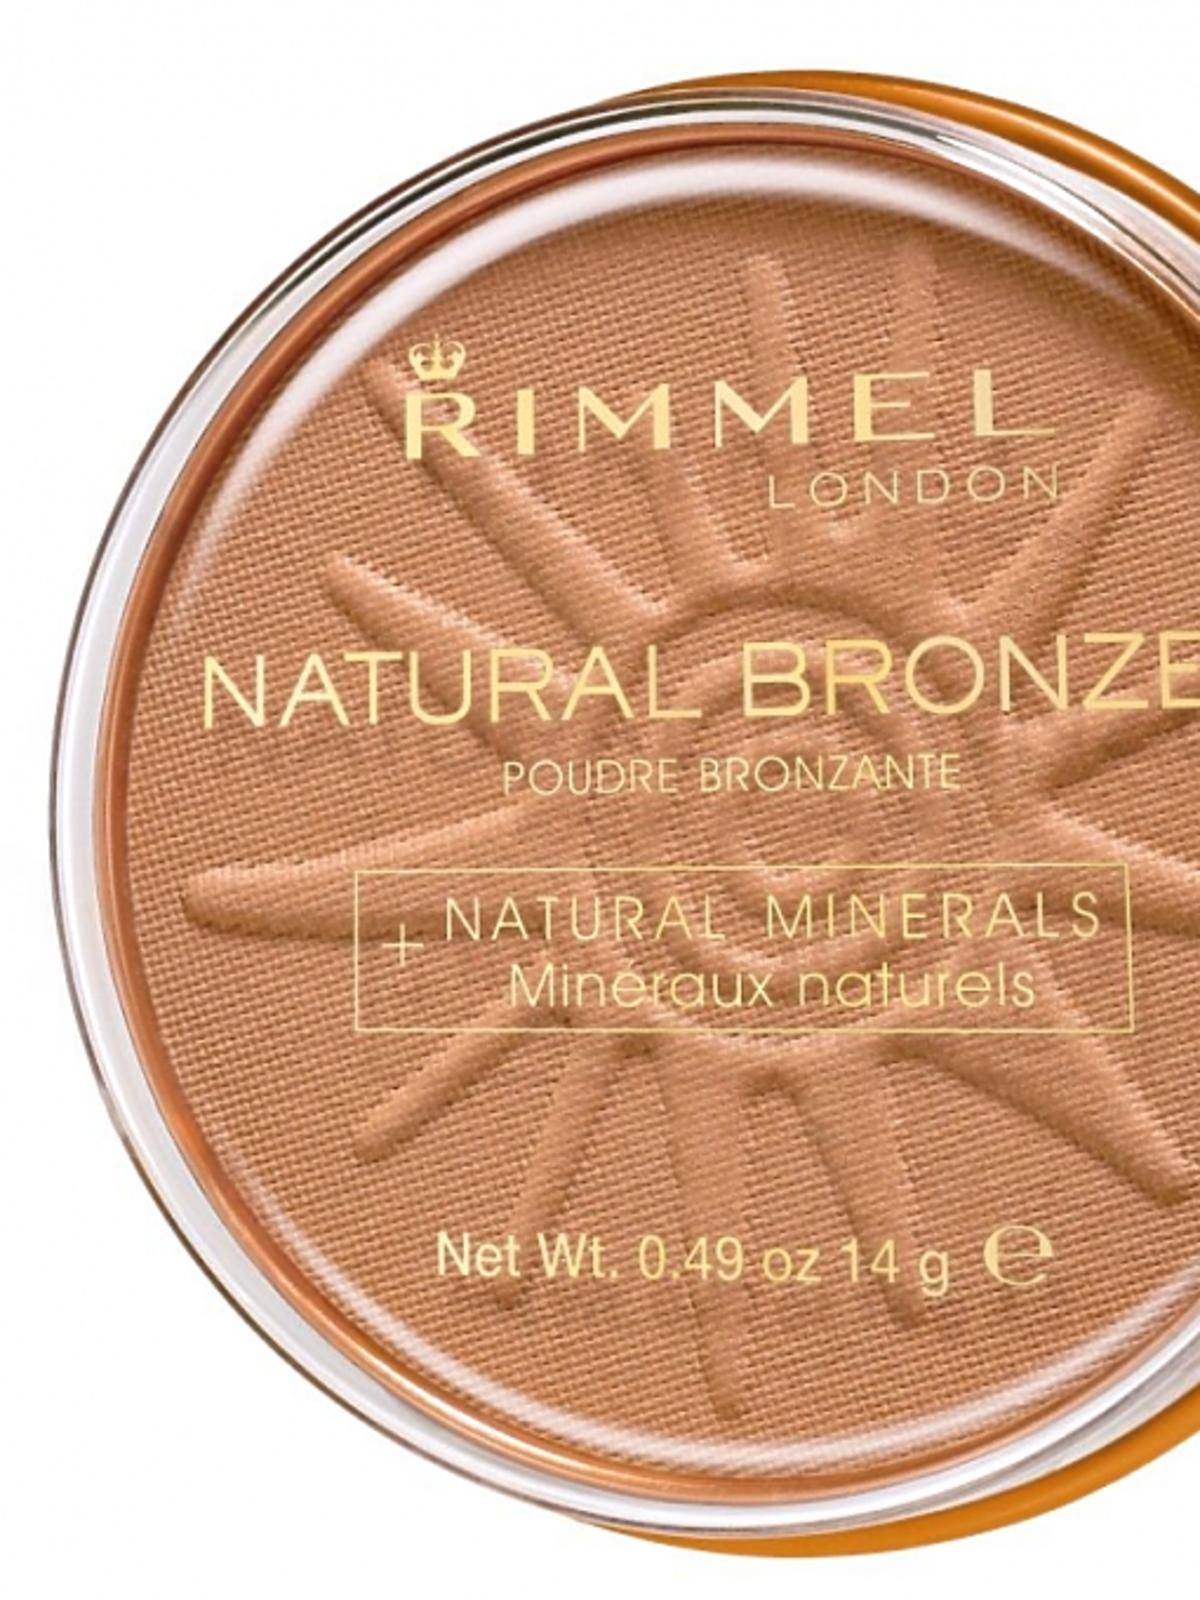 Rimmel, Natural Bronzer